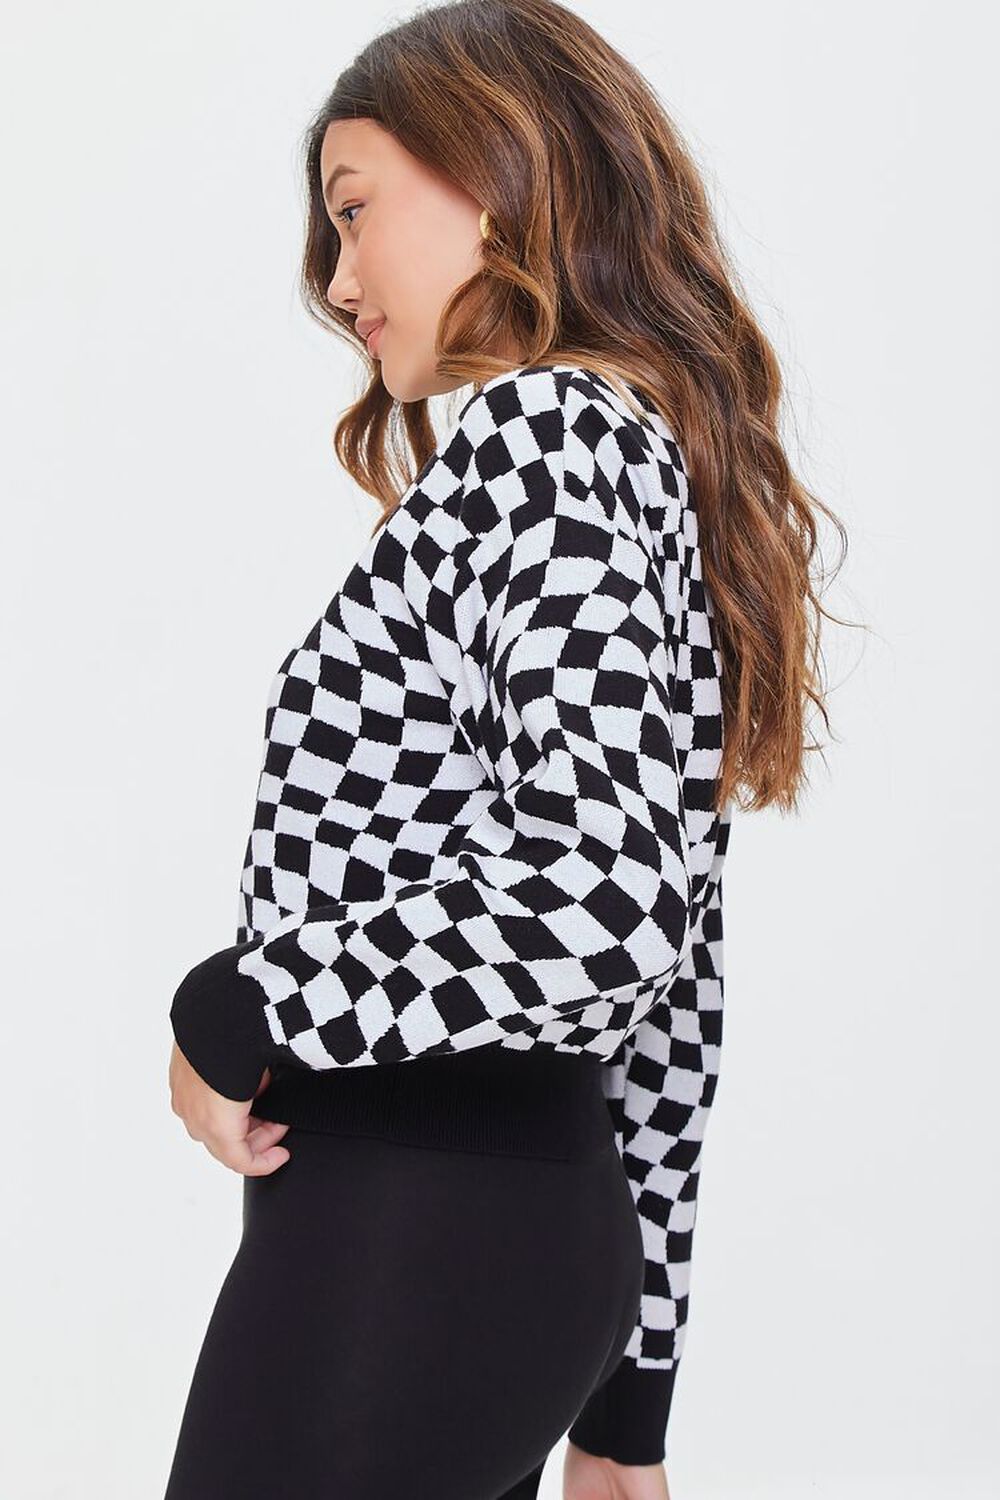 BLACK/WHITE Checkered Drop-Sleeve Sweater, image 2